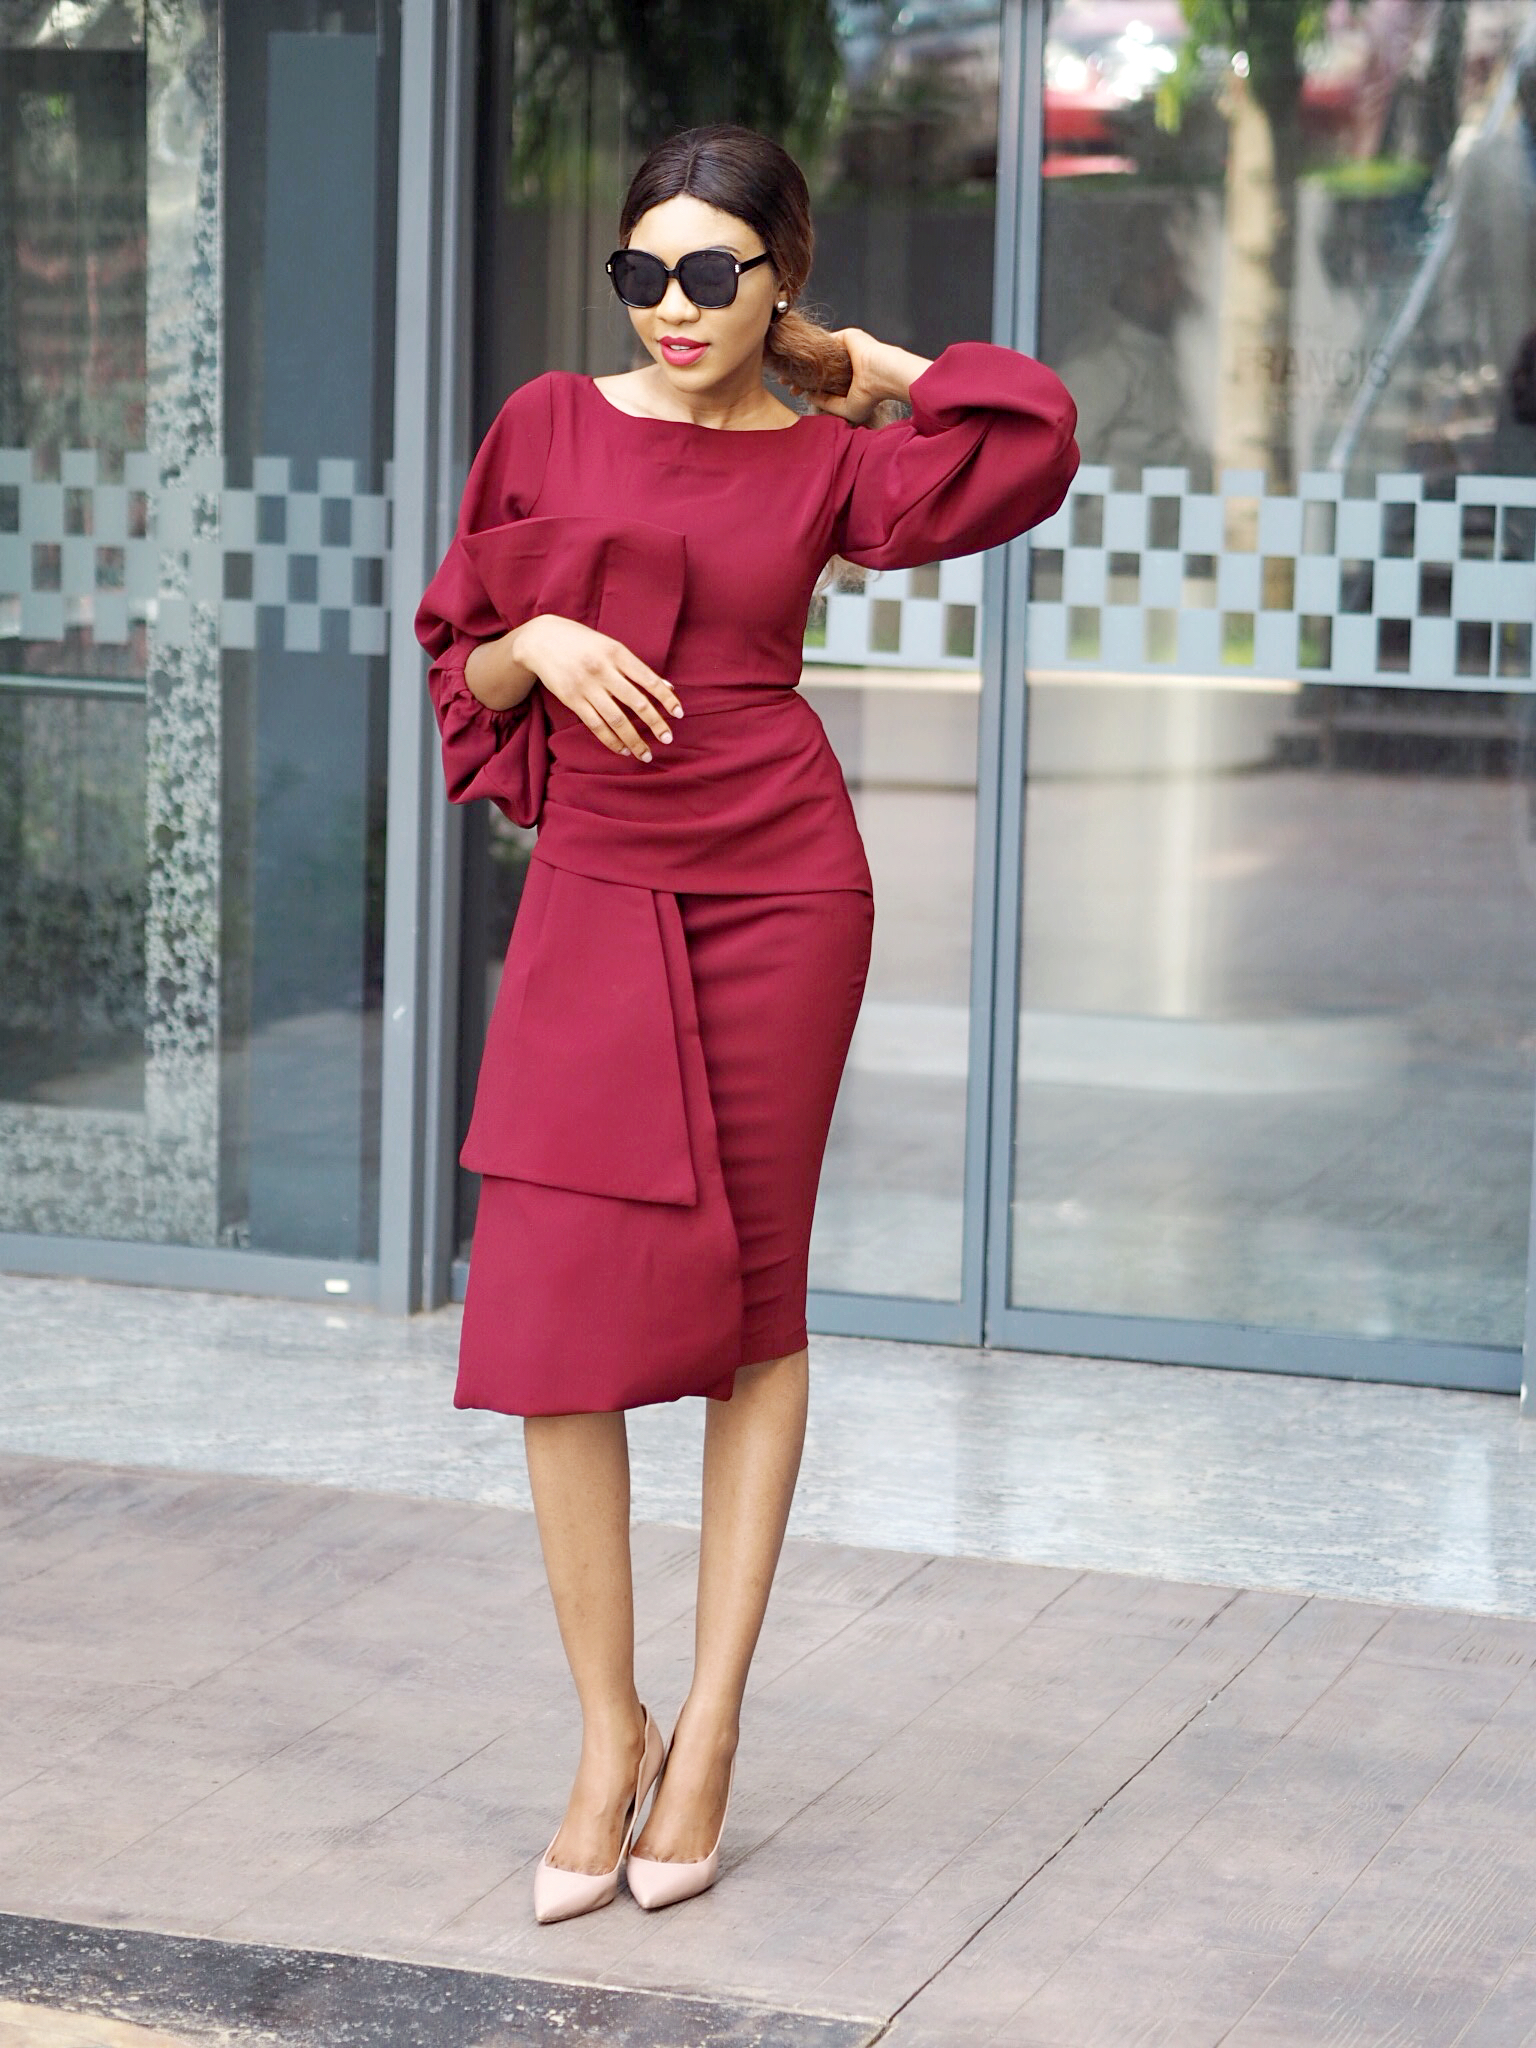 Aura by Divalukky new Bow dress in burgundy on Abuja blogger modavracha